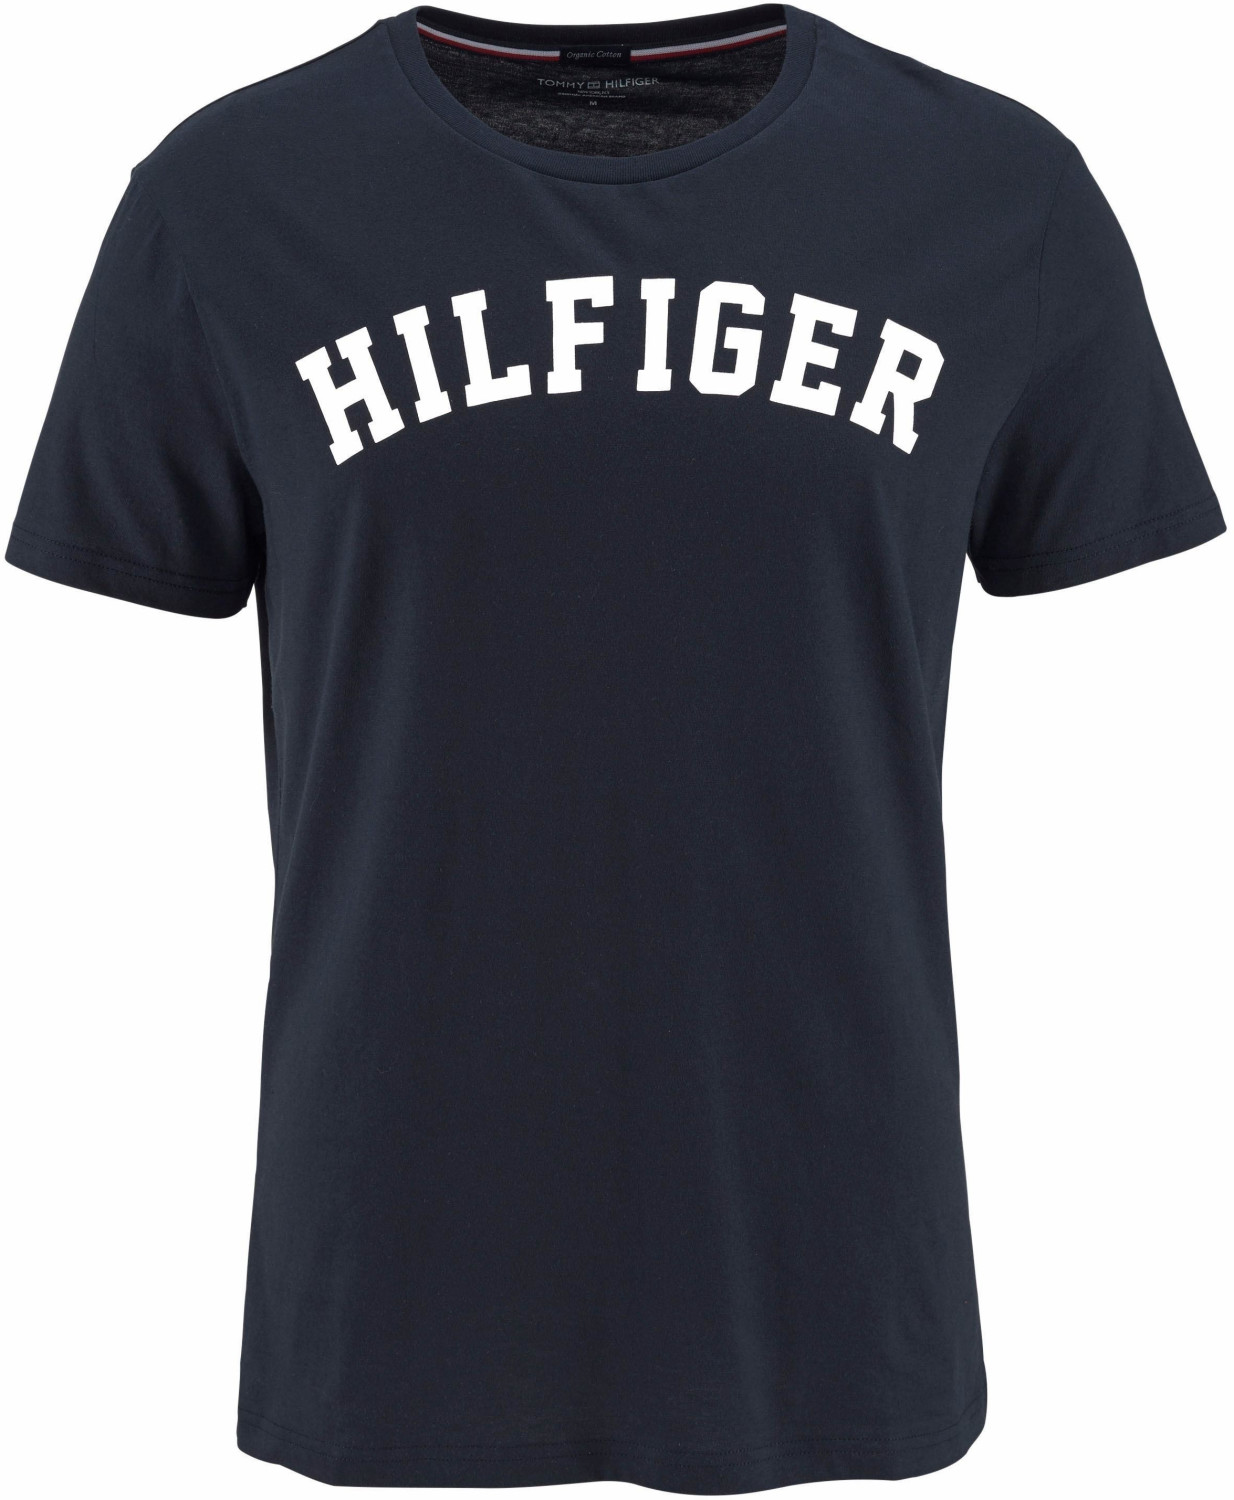 Tommy Hilfiger Logo T- Shirt navy blazer (UM0UM00054-416)